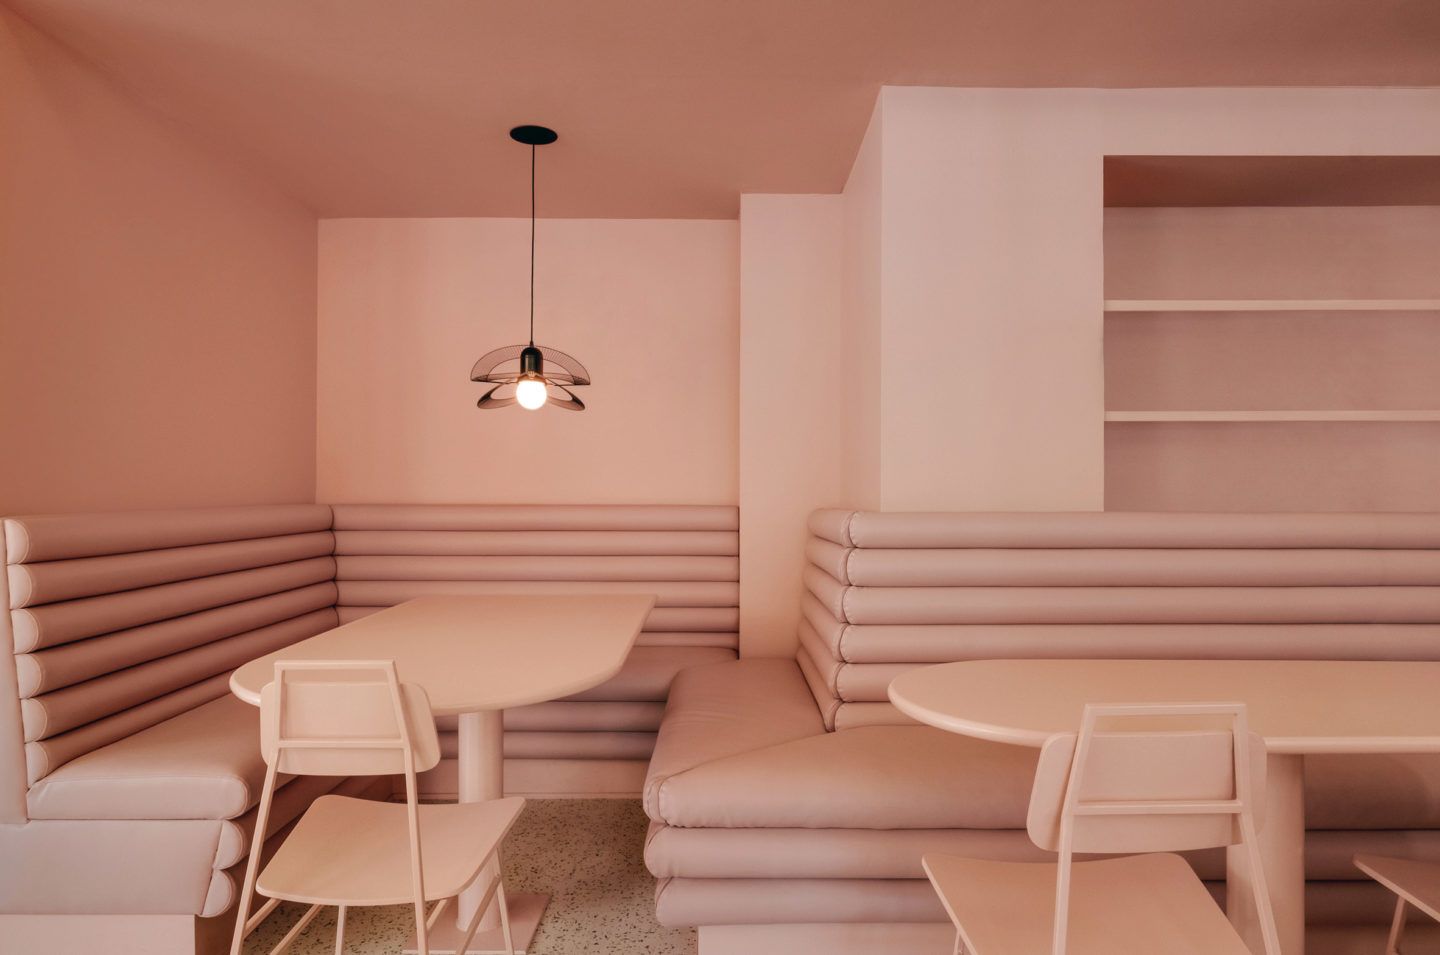 IGNANT-Architecture-Appareil-Architects-Pastel-Rita-Cafe-004